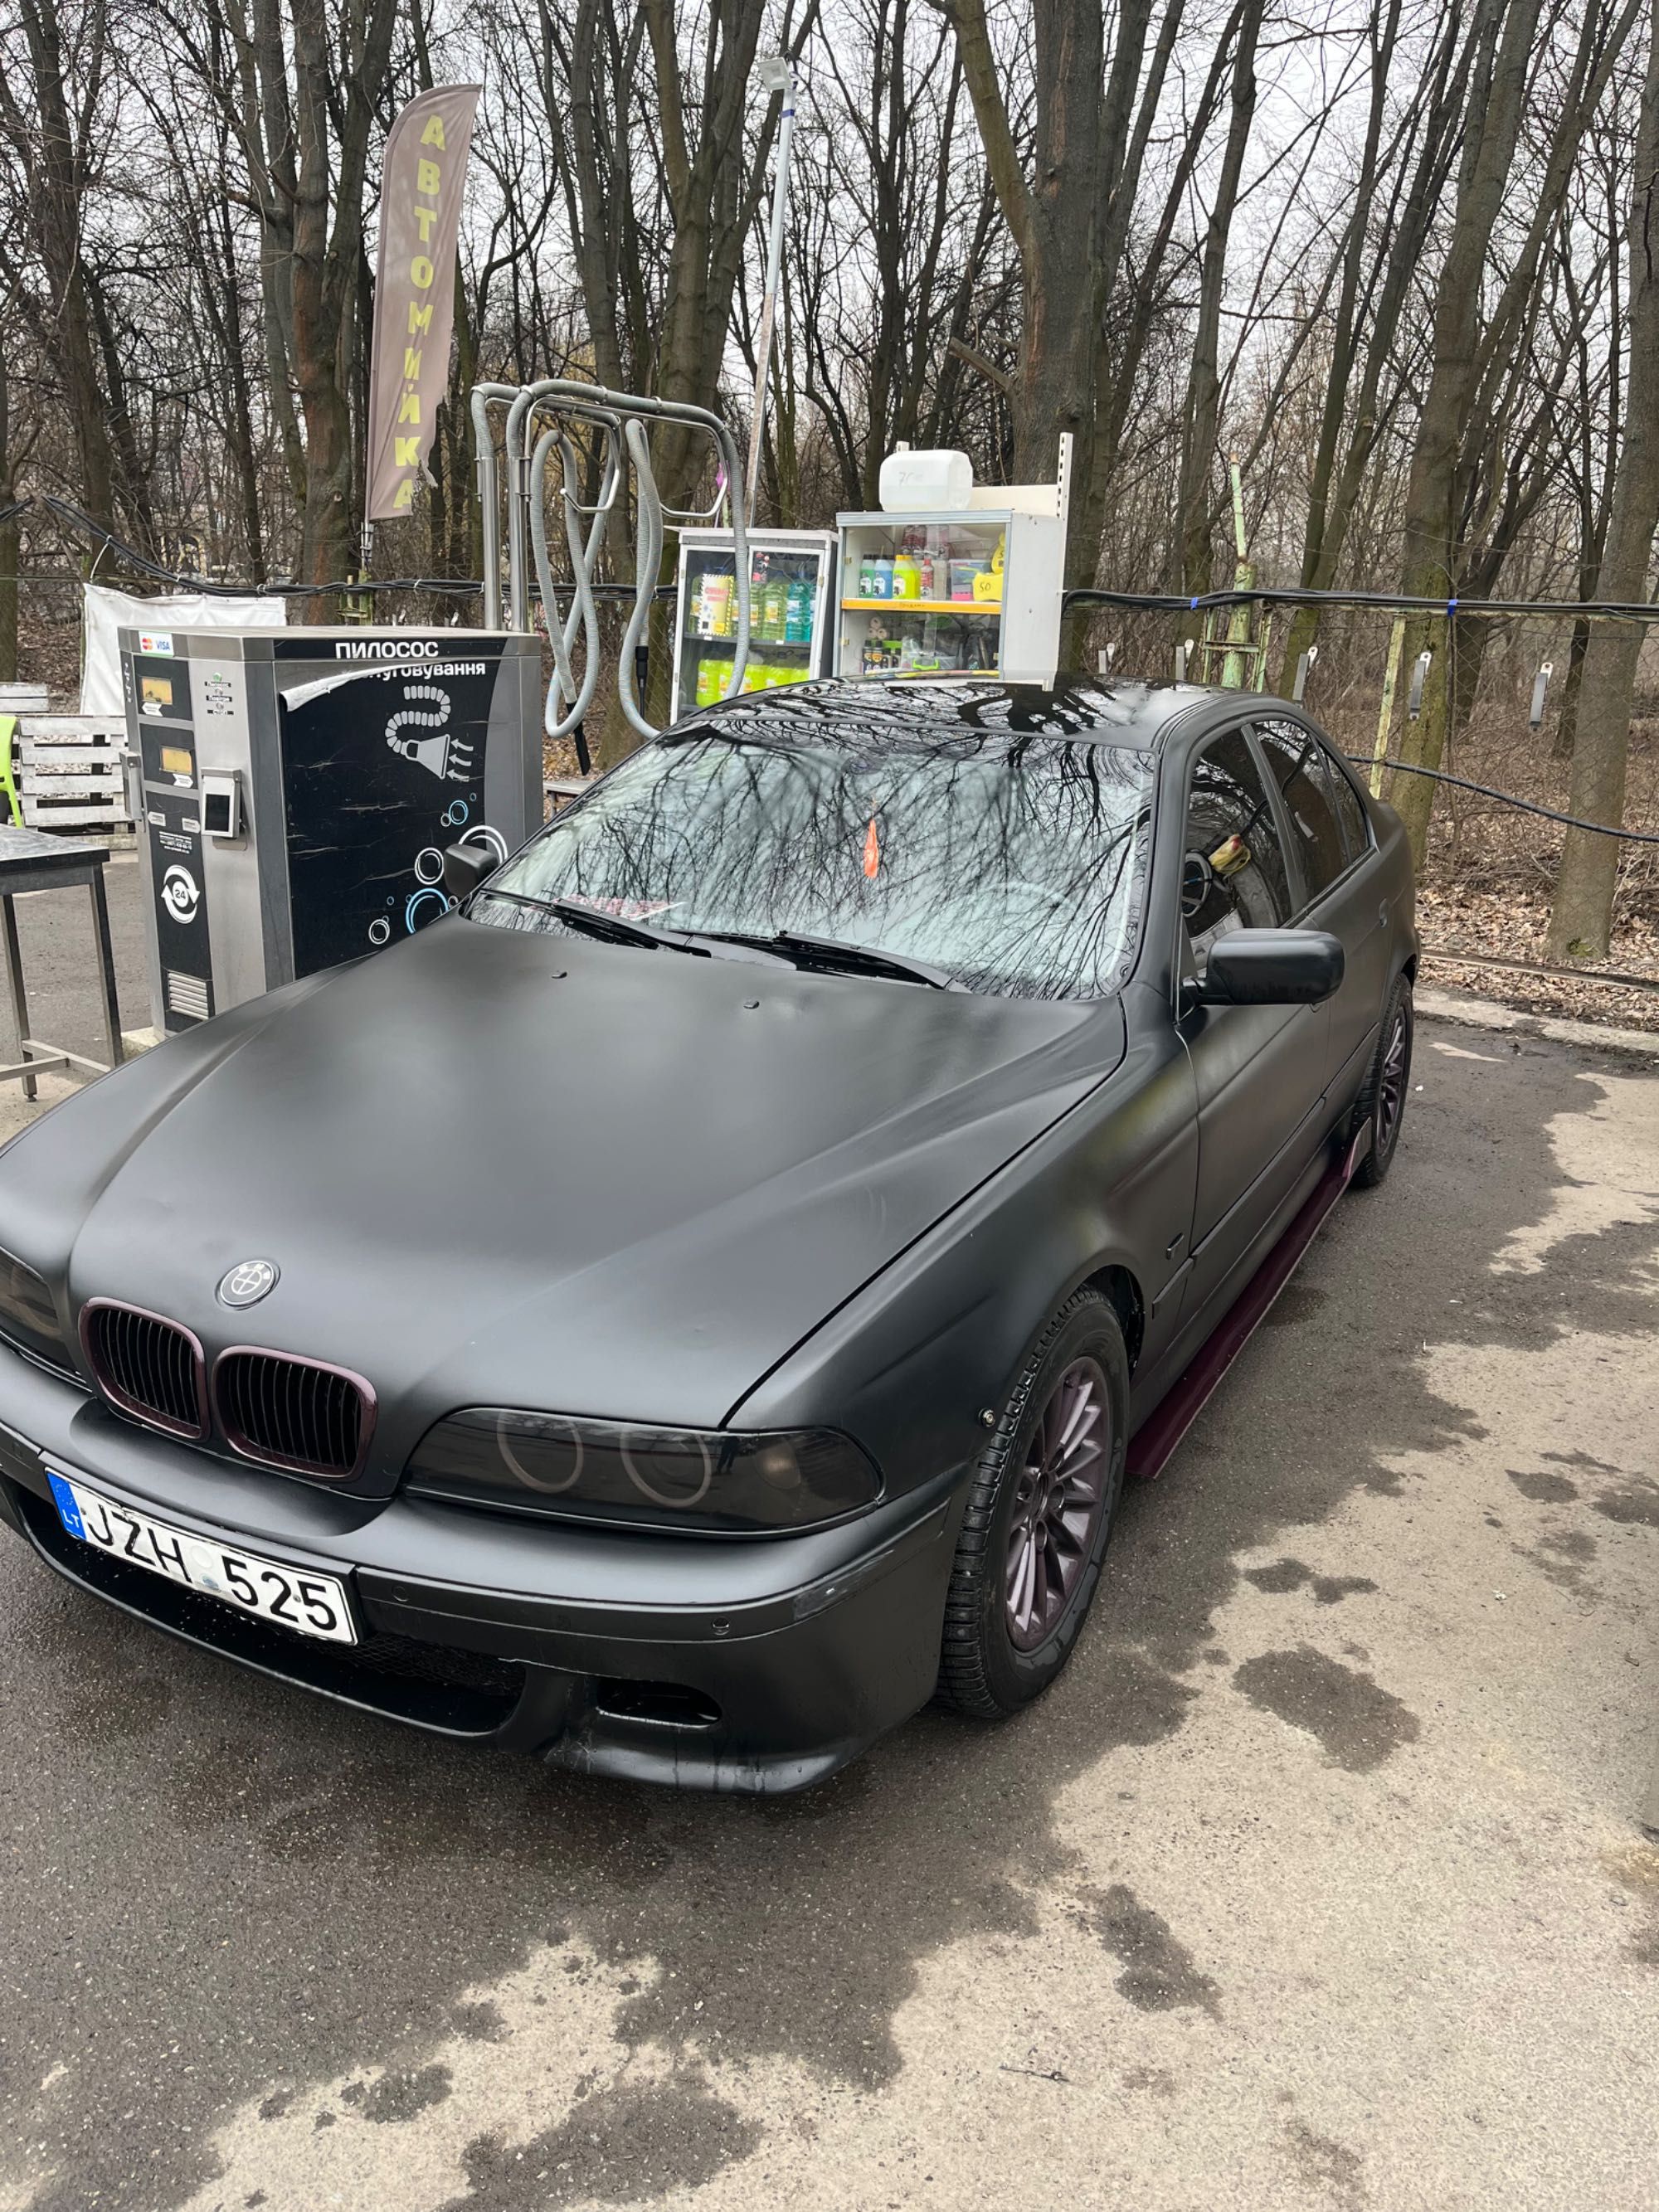 BMW 5 series e39